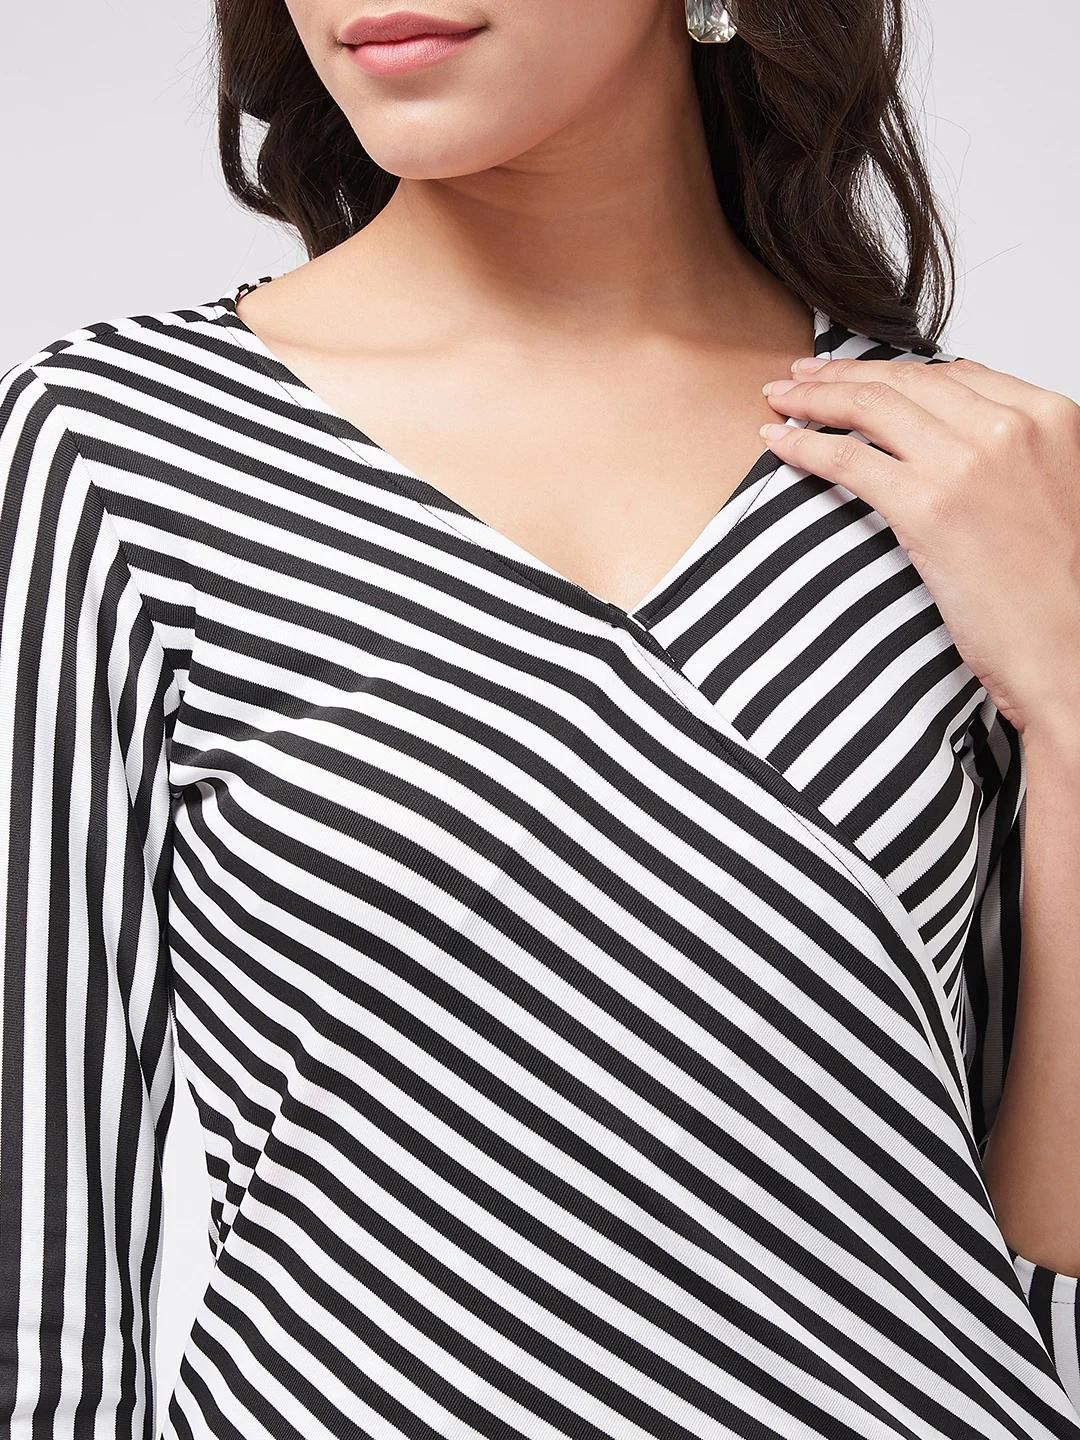 PANNKH Monocromatic Black & White Stripe Overlap Top ShopFastify